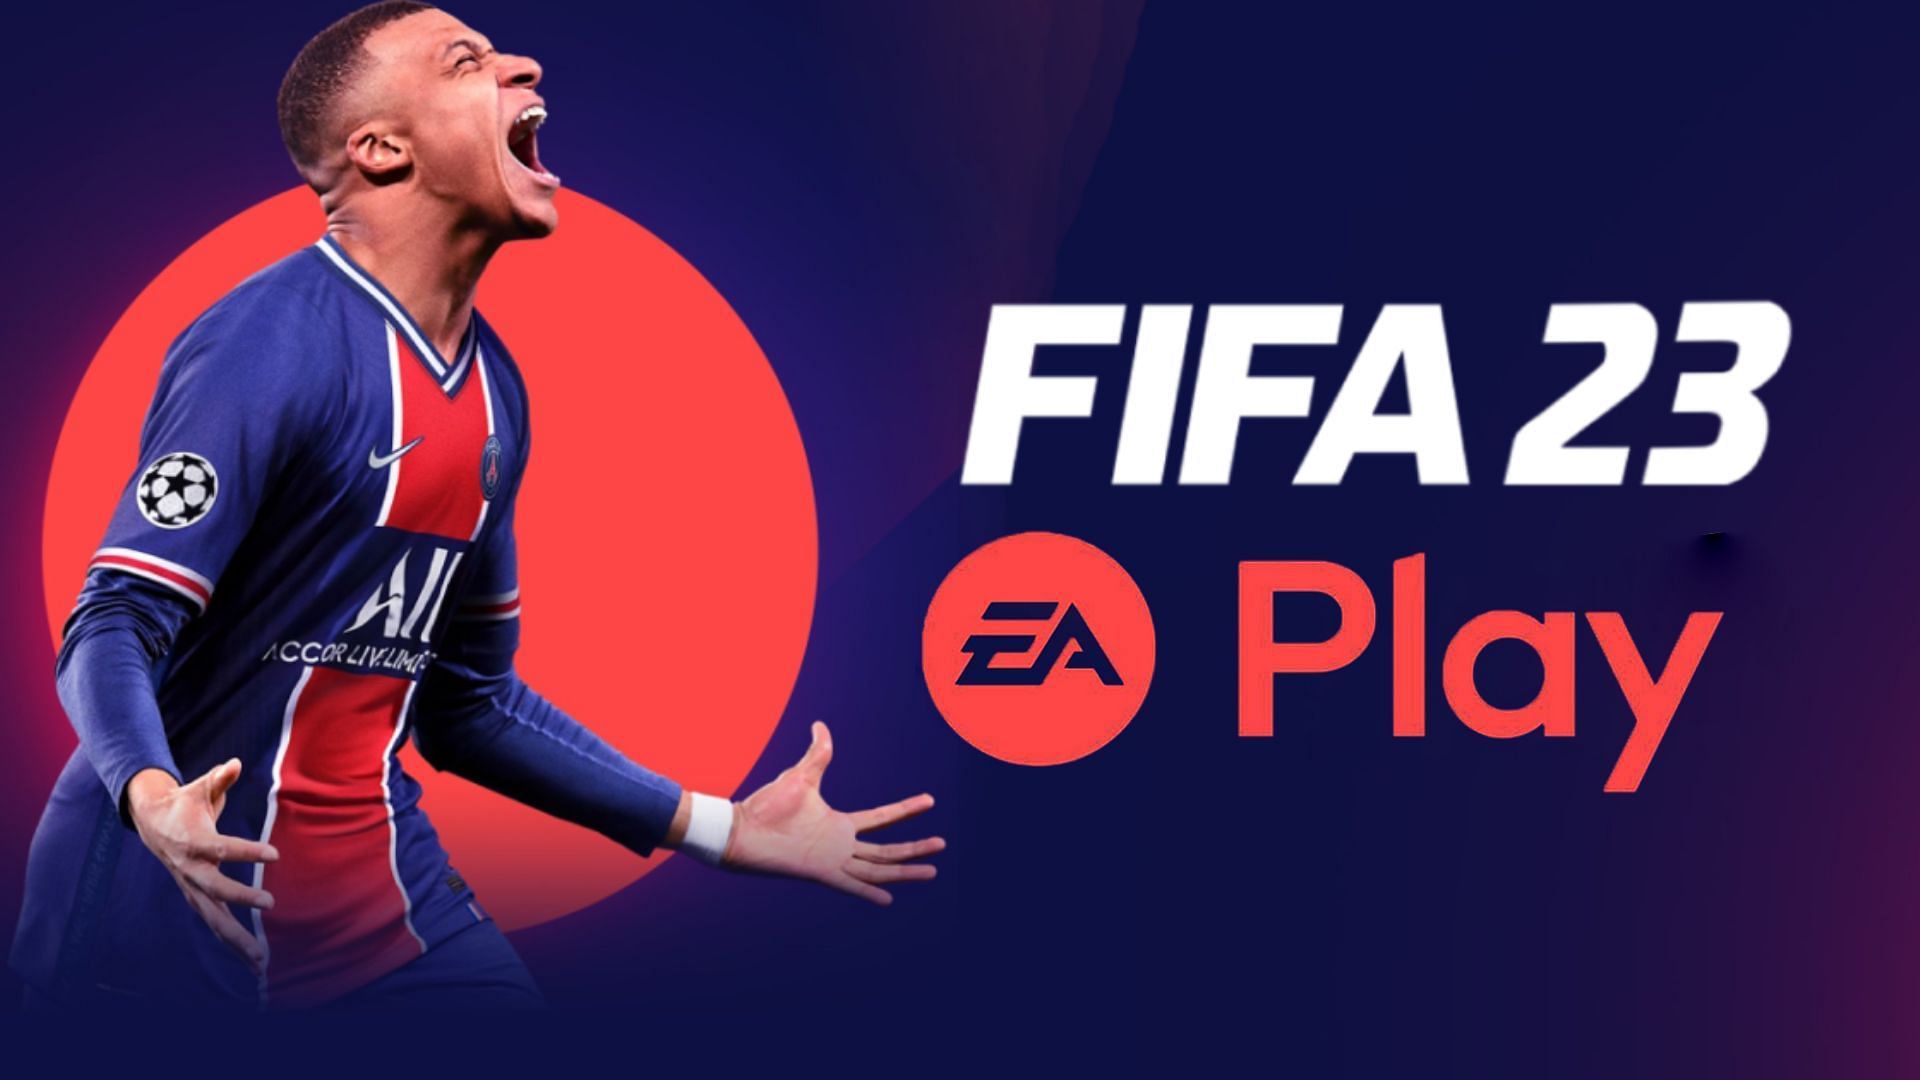 Ea play fifa. FIFA Play. FIFA 23 EA Play. FIFA 23 польская версия. FIFA early.